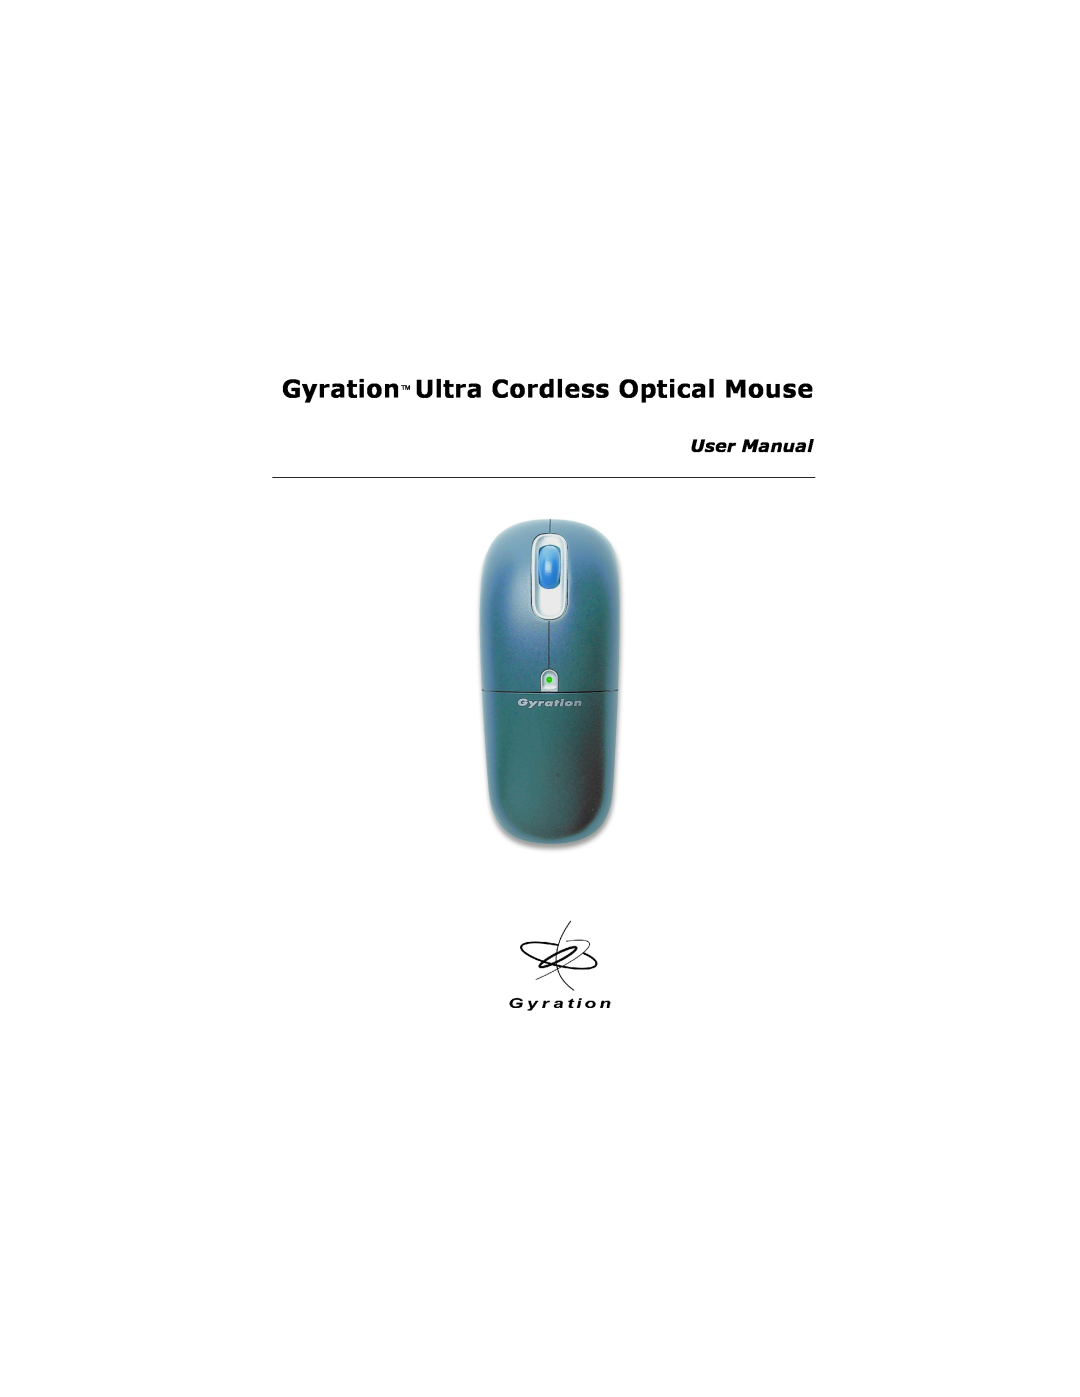 Gyration user manual Gyration Ultra Cordless Optical Mouse, User Manual 